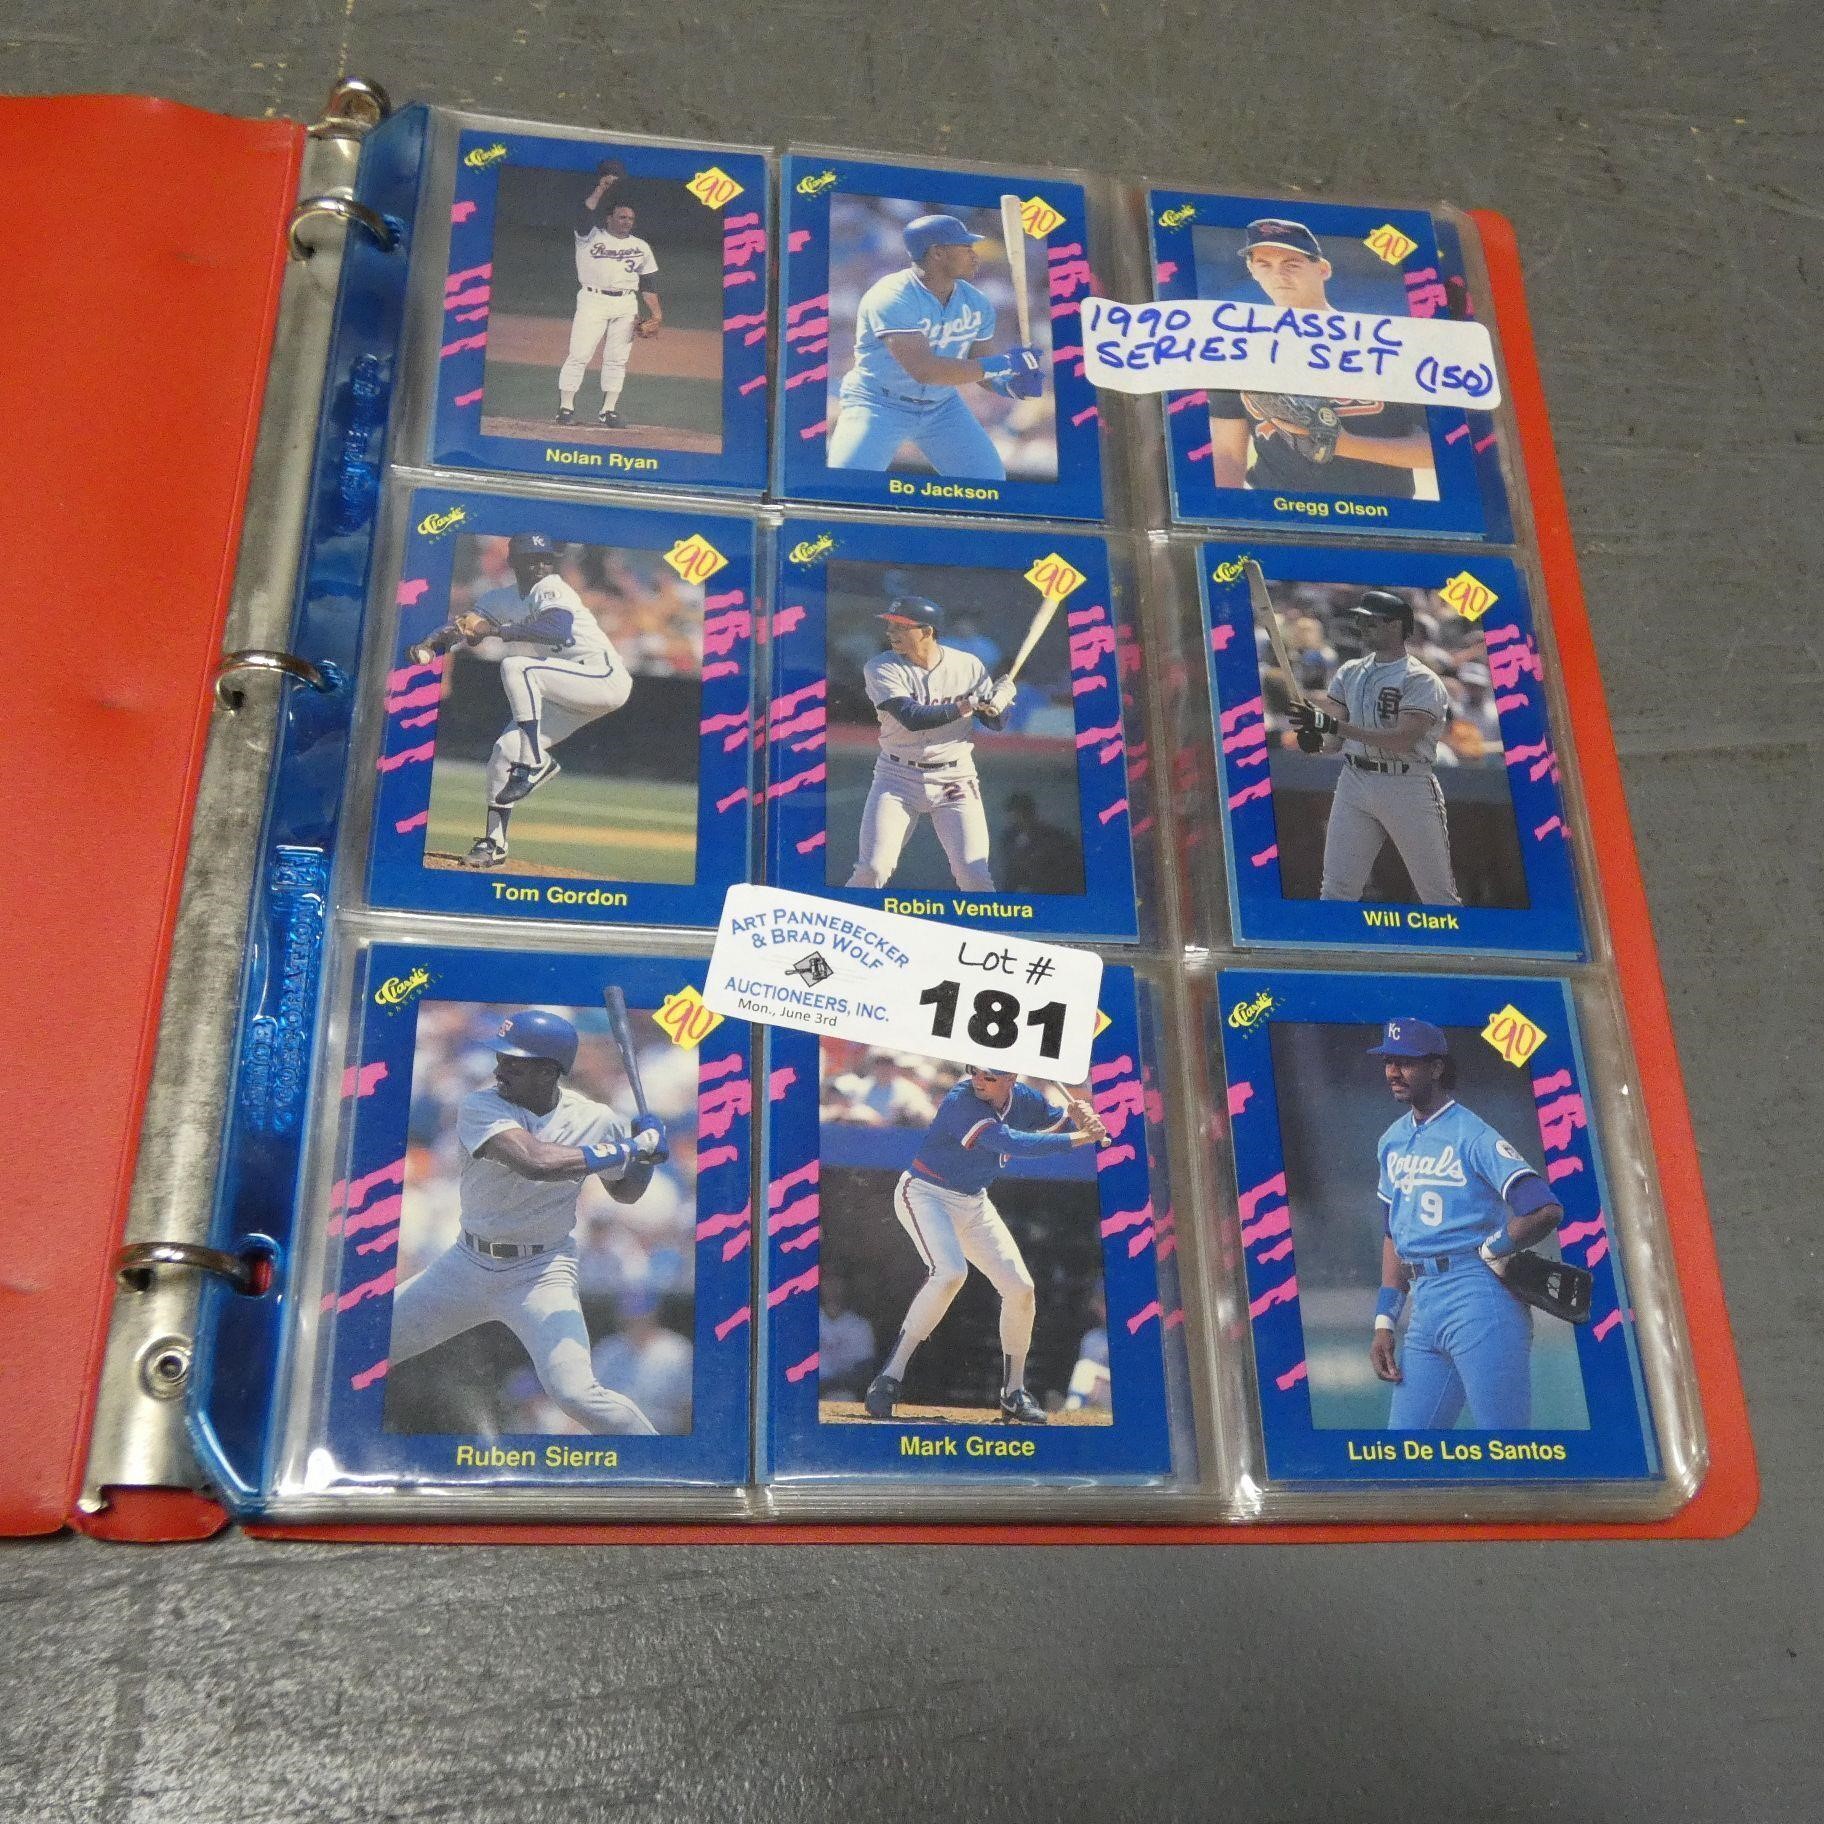 1990 Classic Series 1 Baseball Complete Set (150)